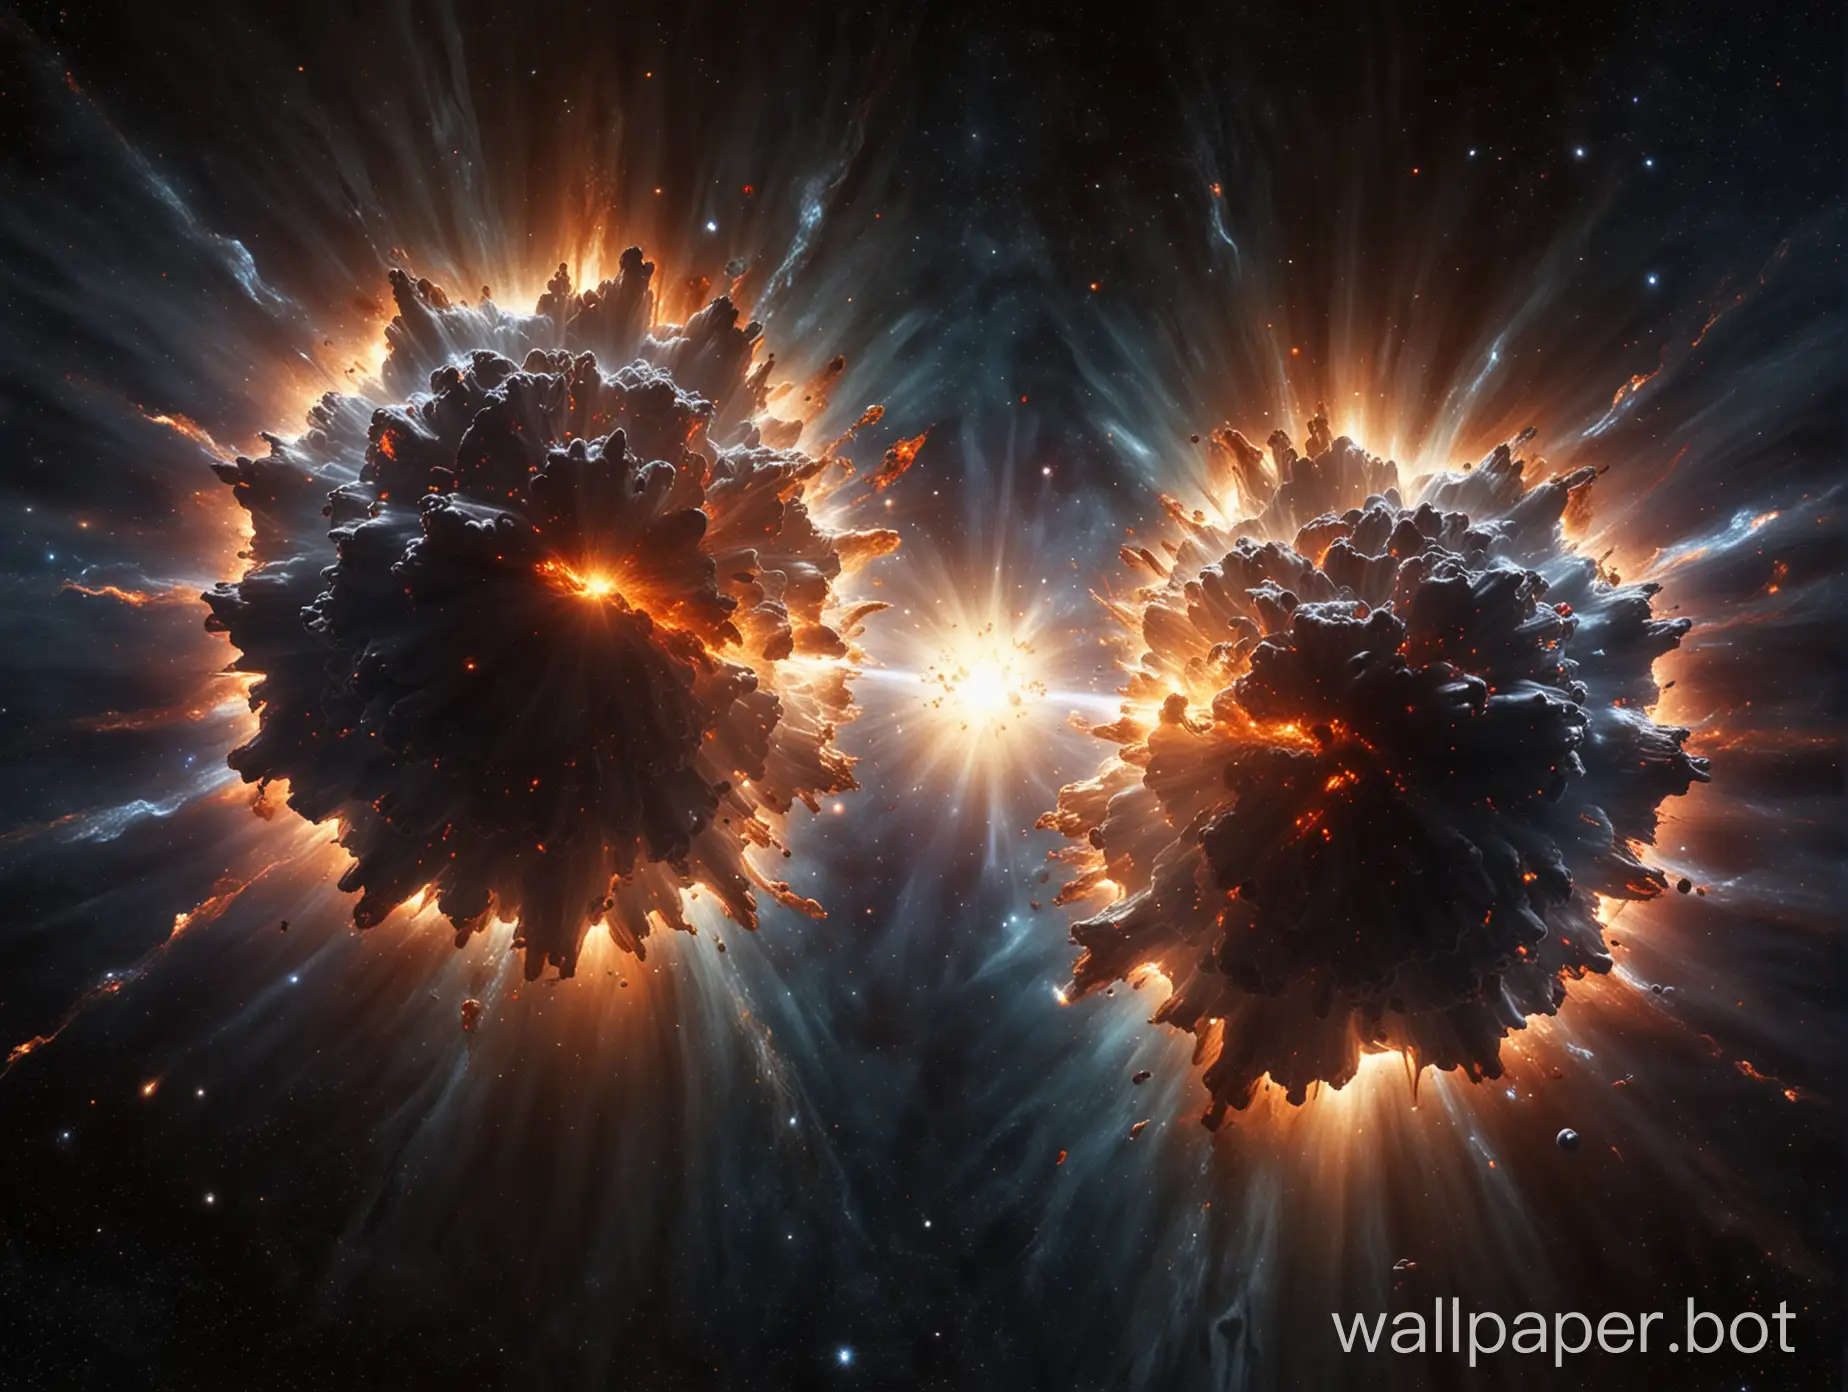 Colliding-Supernova-Stars-Photorealistic-Blast-Wave-in-Space